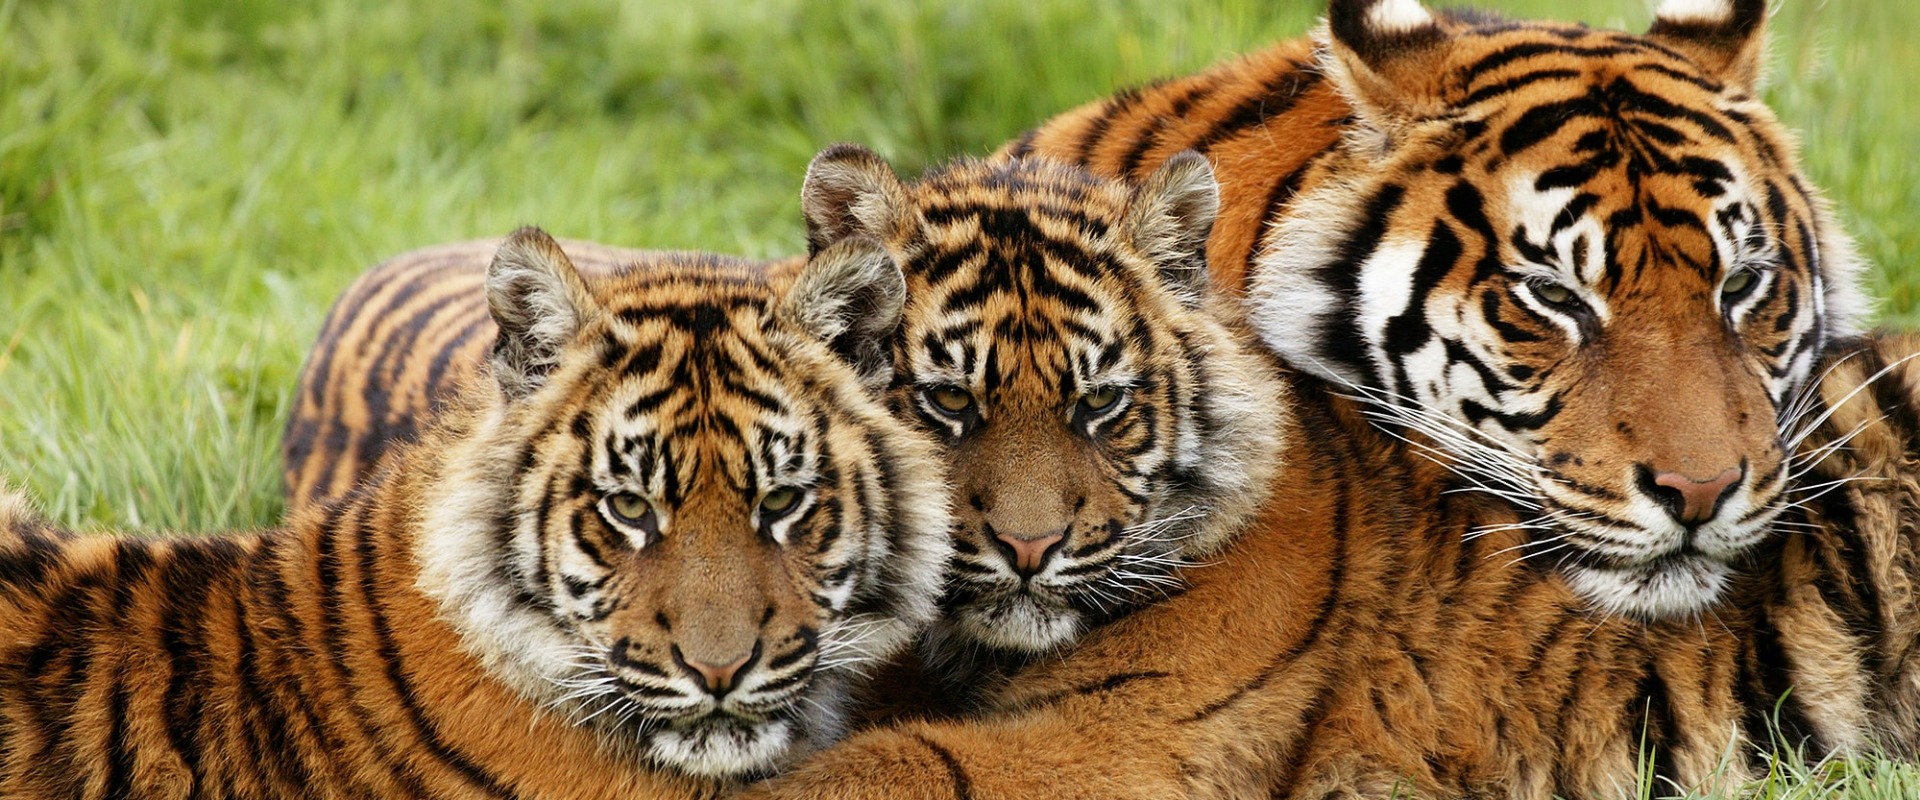 Female Sumatran Tiger with Cubs, by slowmotiongli